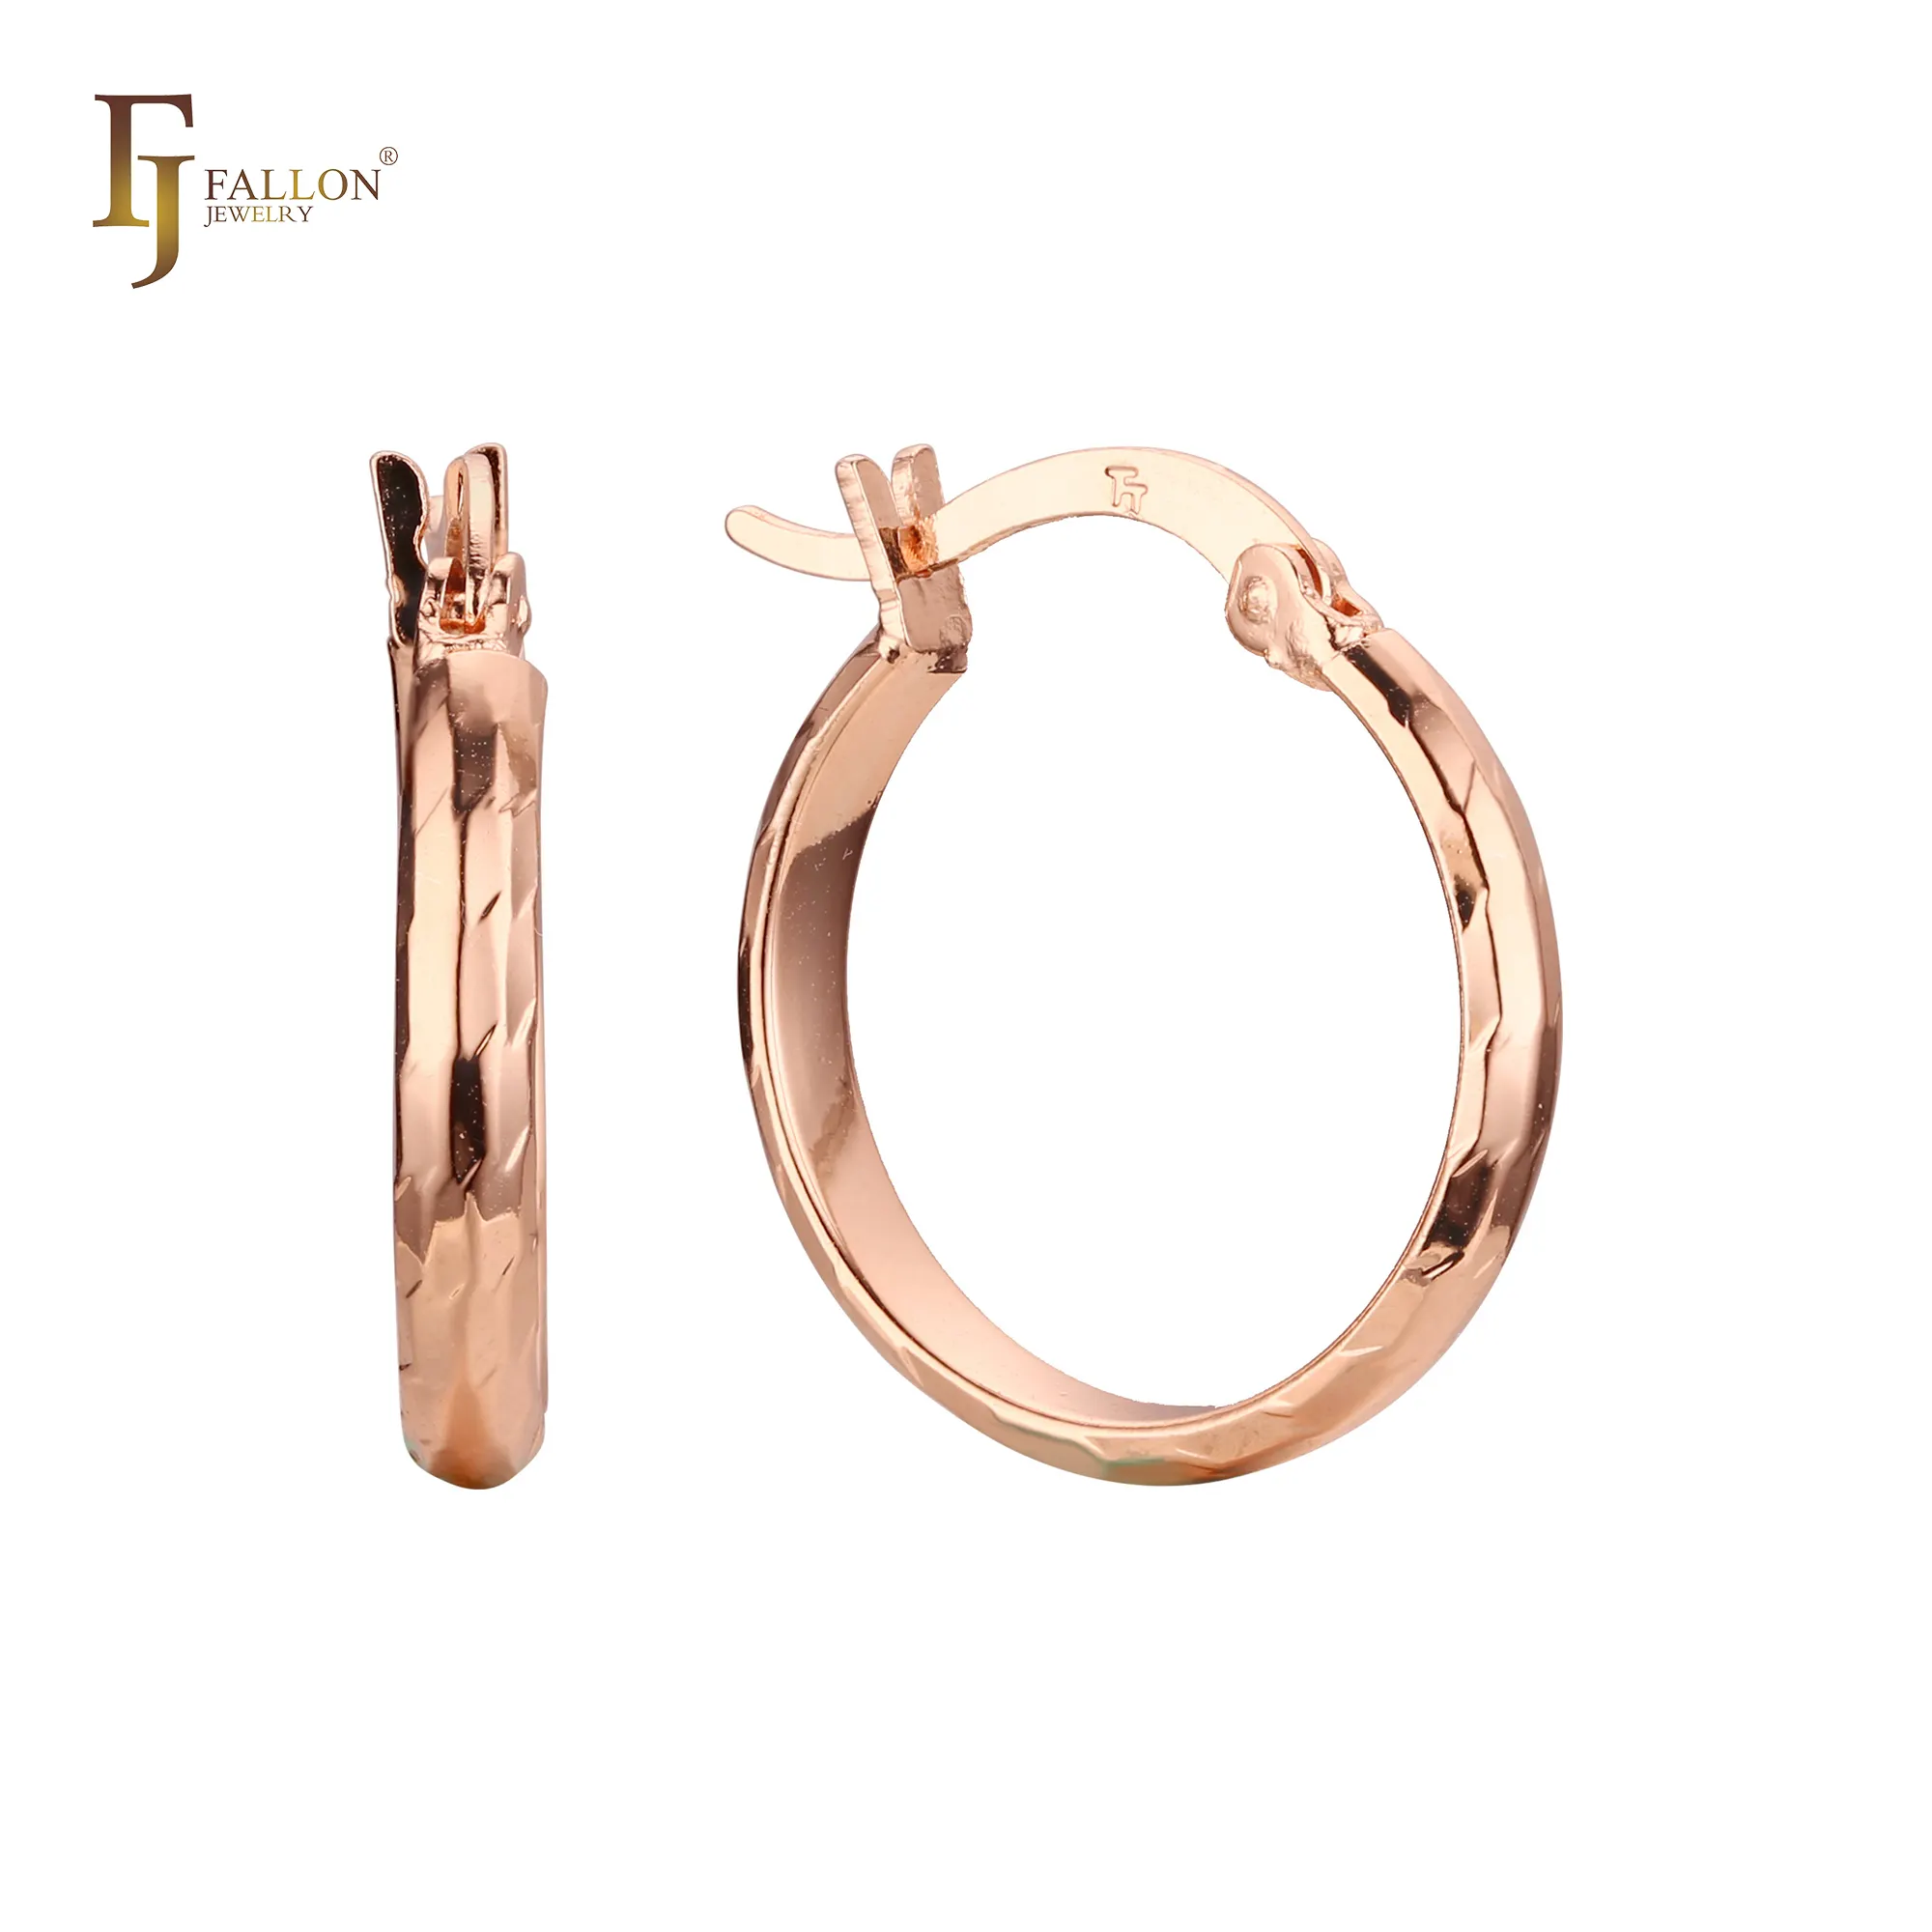 F82100218 FJ פאלון תכשיטי אופנה עגילי חישוק בשלושה גוונים מצופה ברוז זהב פליז על בסיס